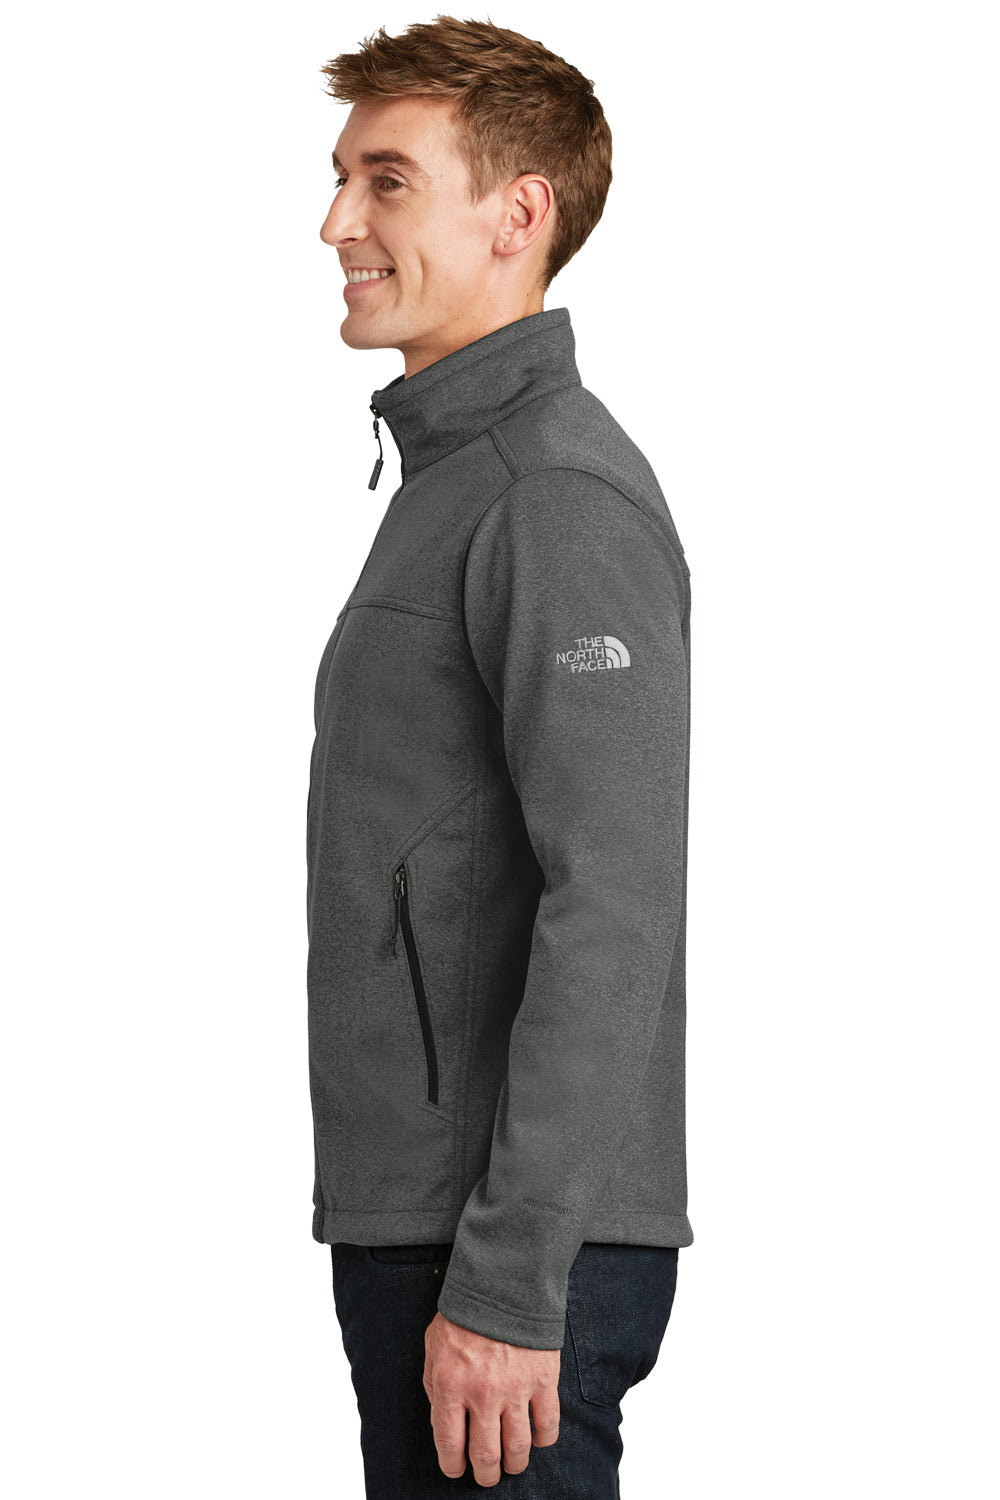 The North Face NF0A3LGX Mens Ridgeline Wind & Water Resistant Full Zip Jacket Heather Dark Grey Side